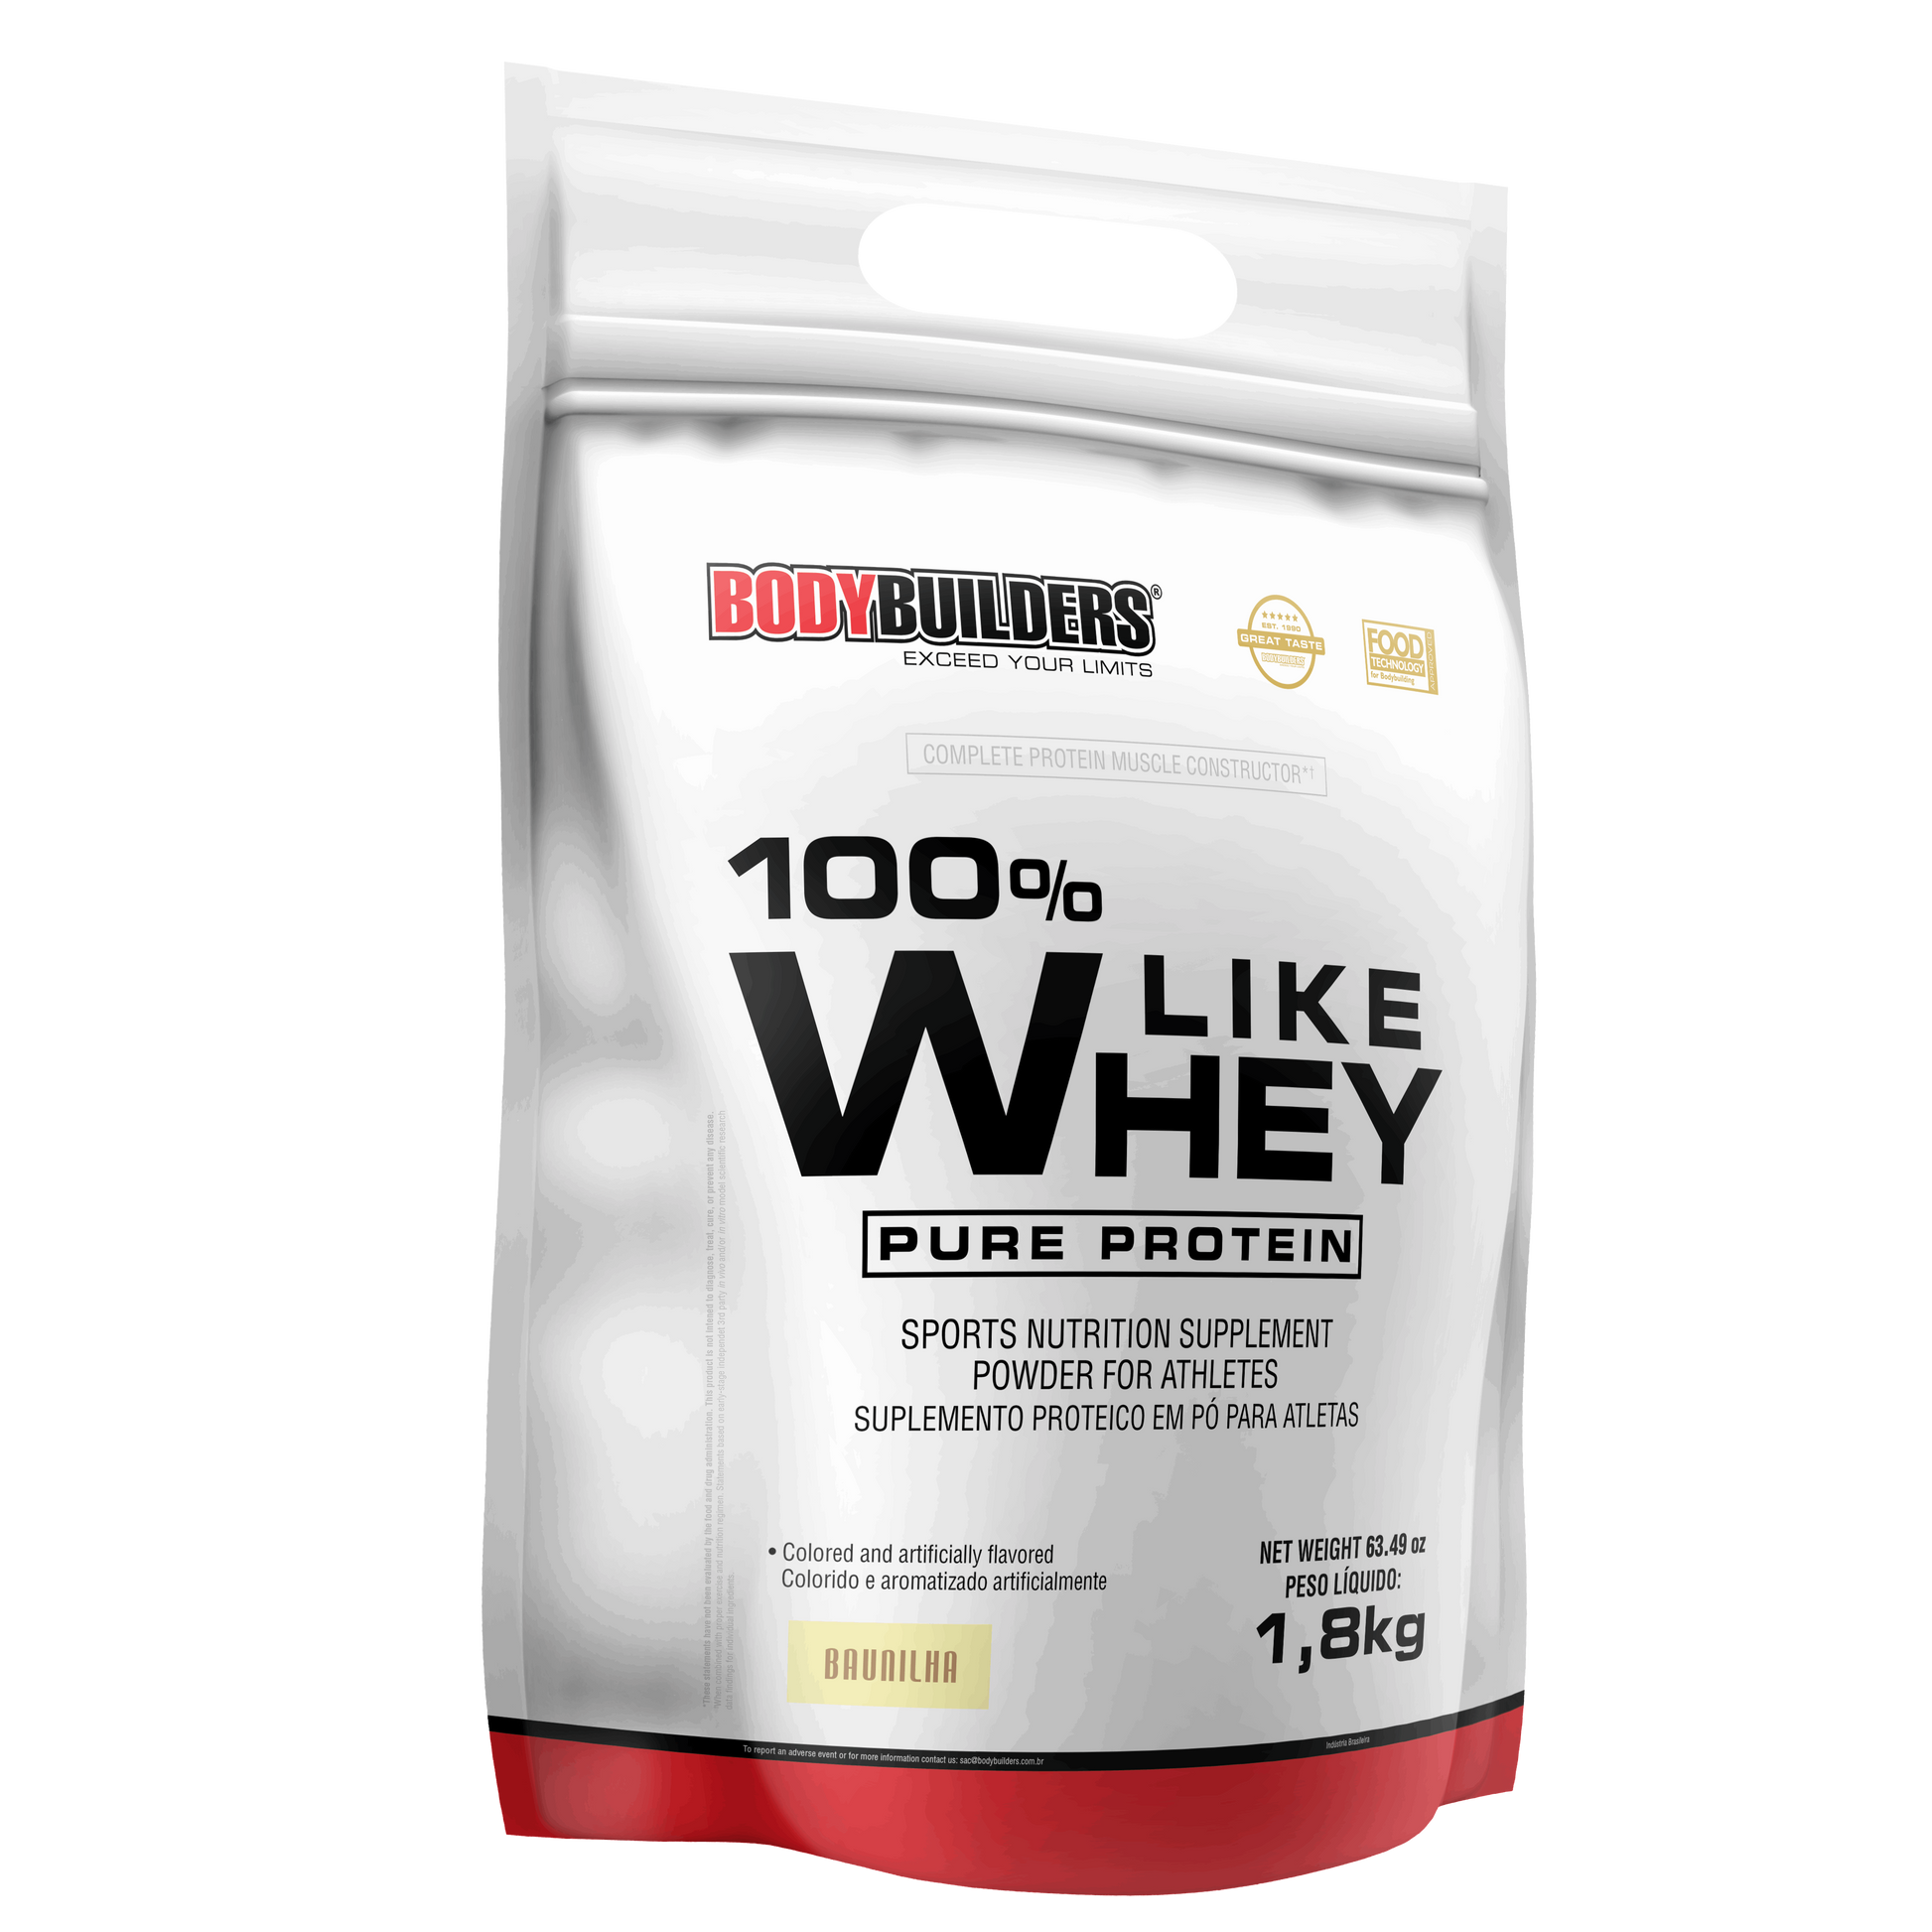 Whey Protein Bodybuilders 100% Like Whey - Proteína Concentrada